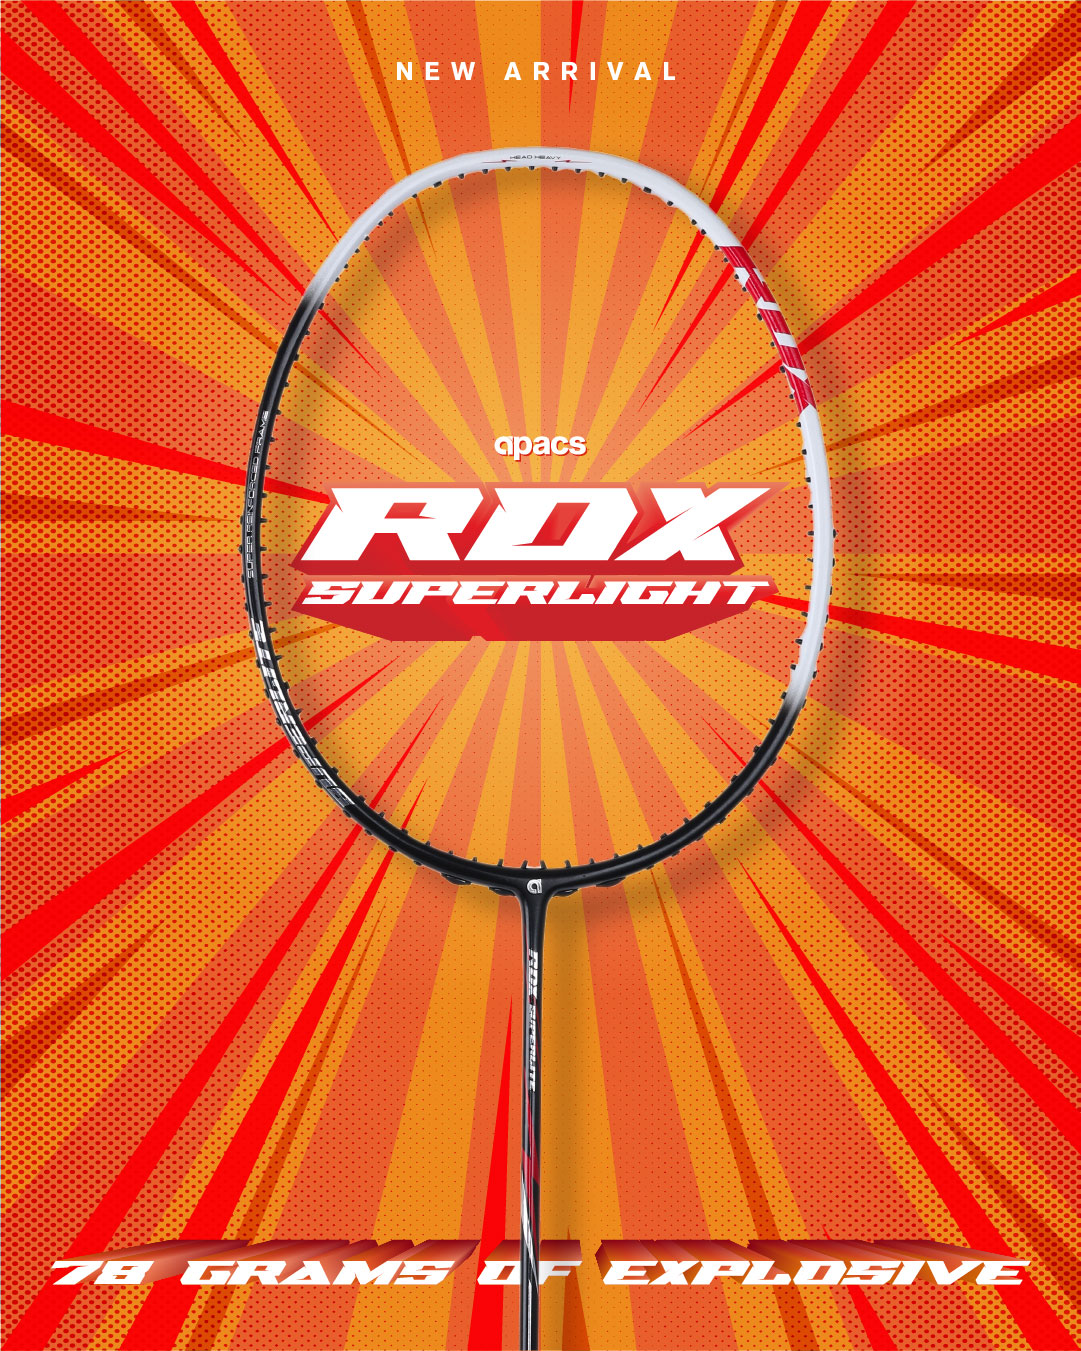 rdx superlight badminton racket red color